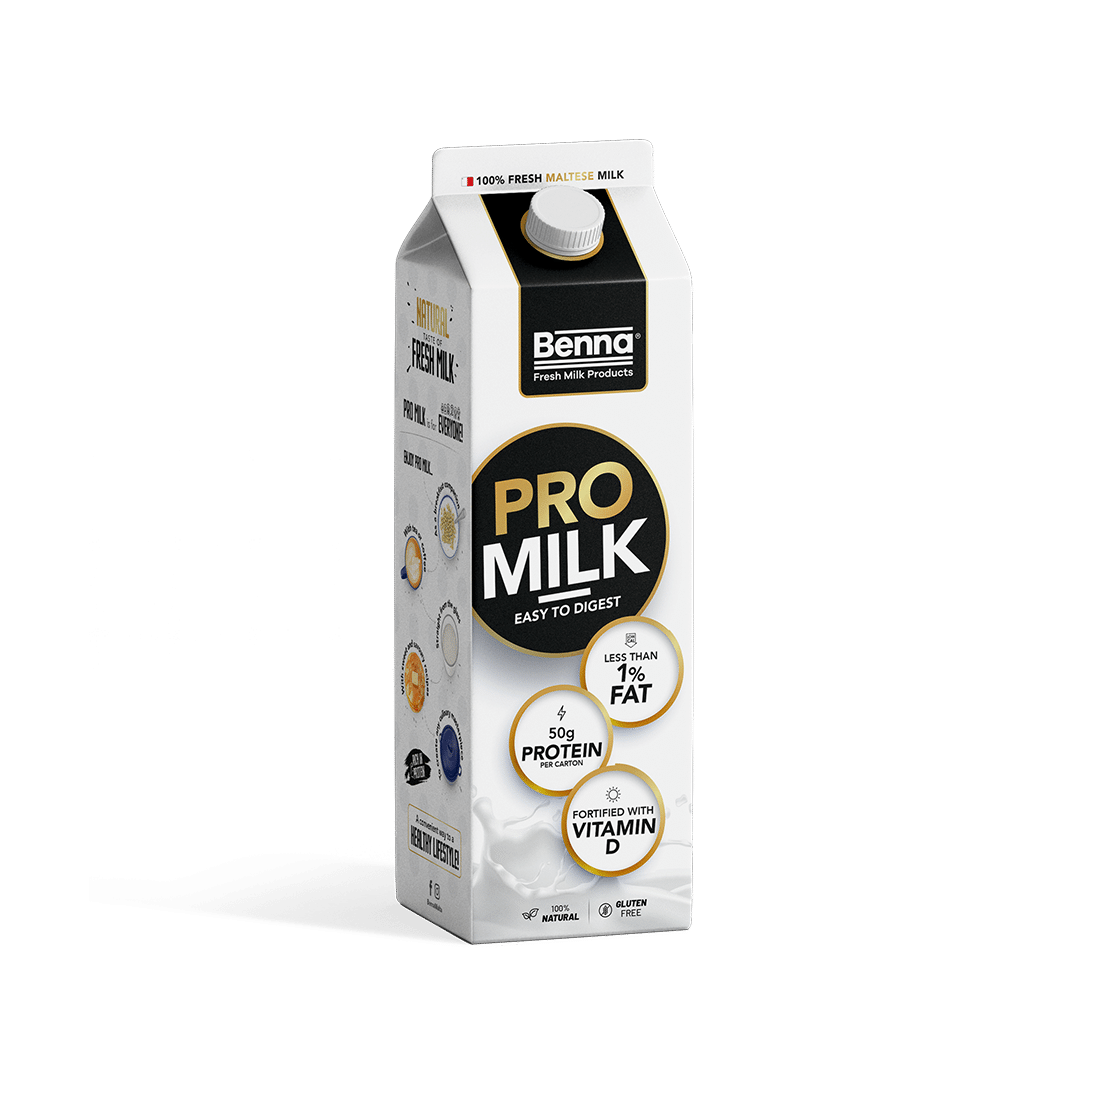 PRO Milk - Benna